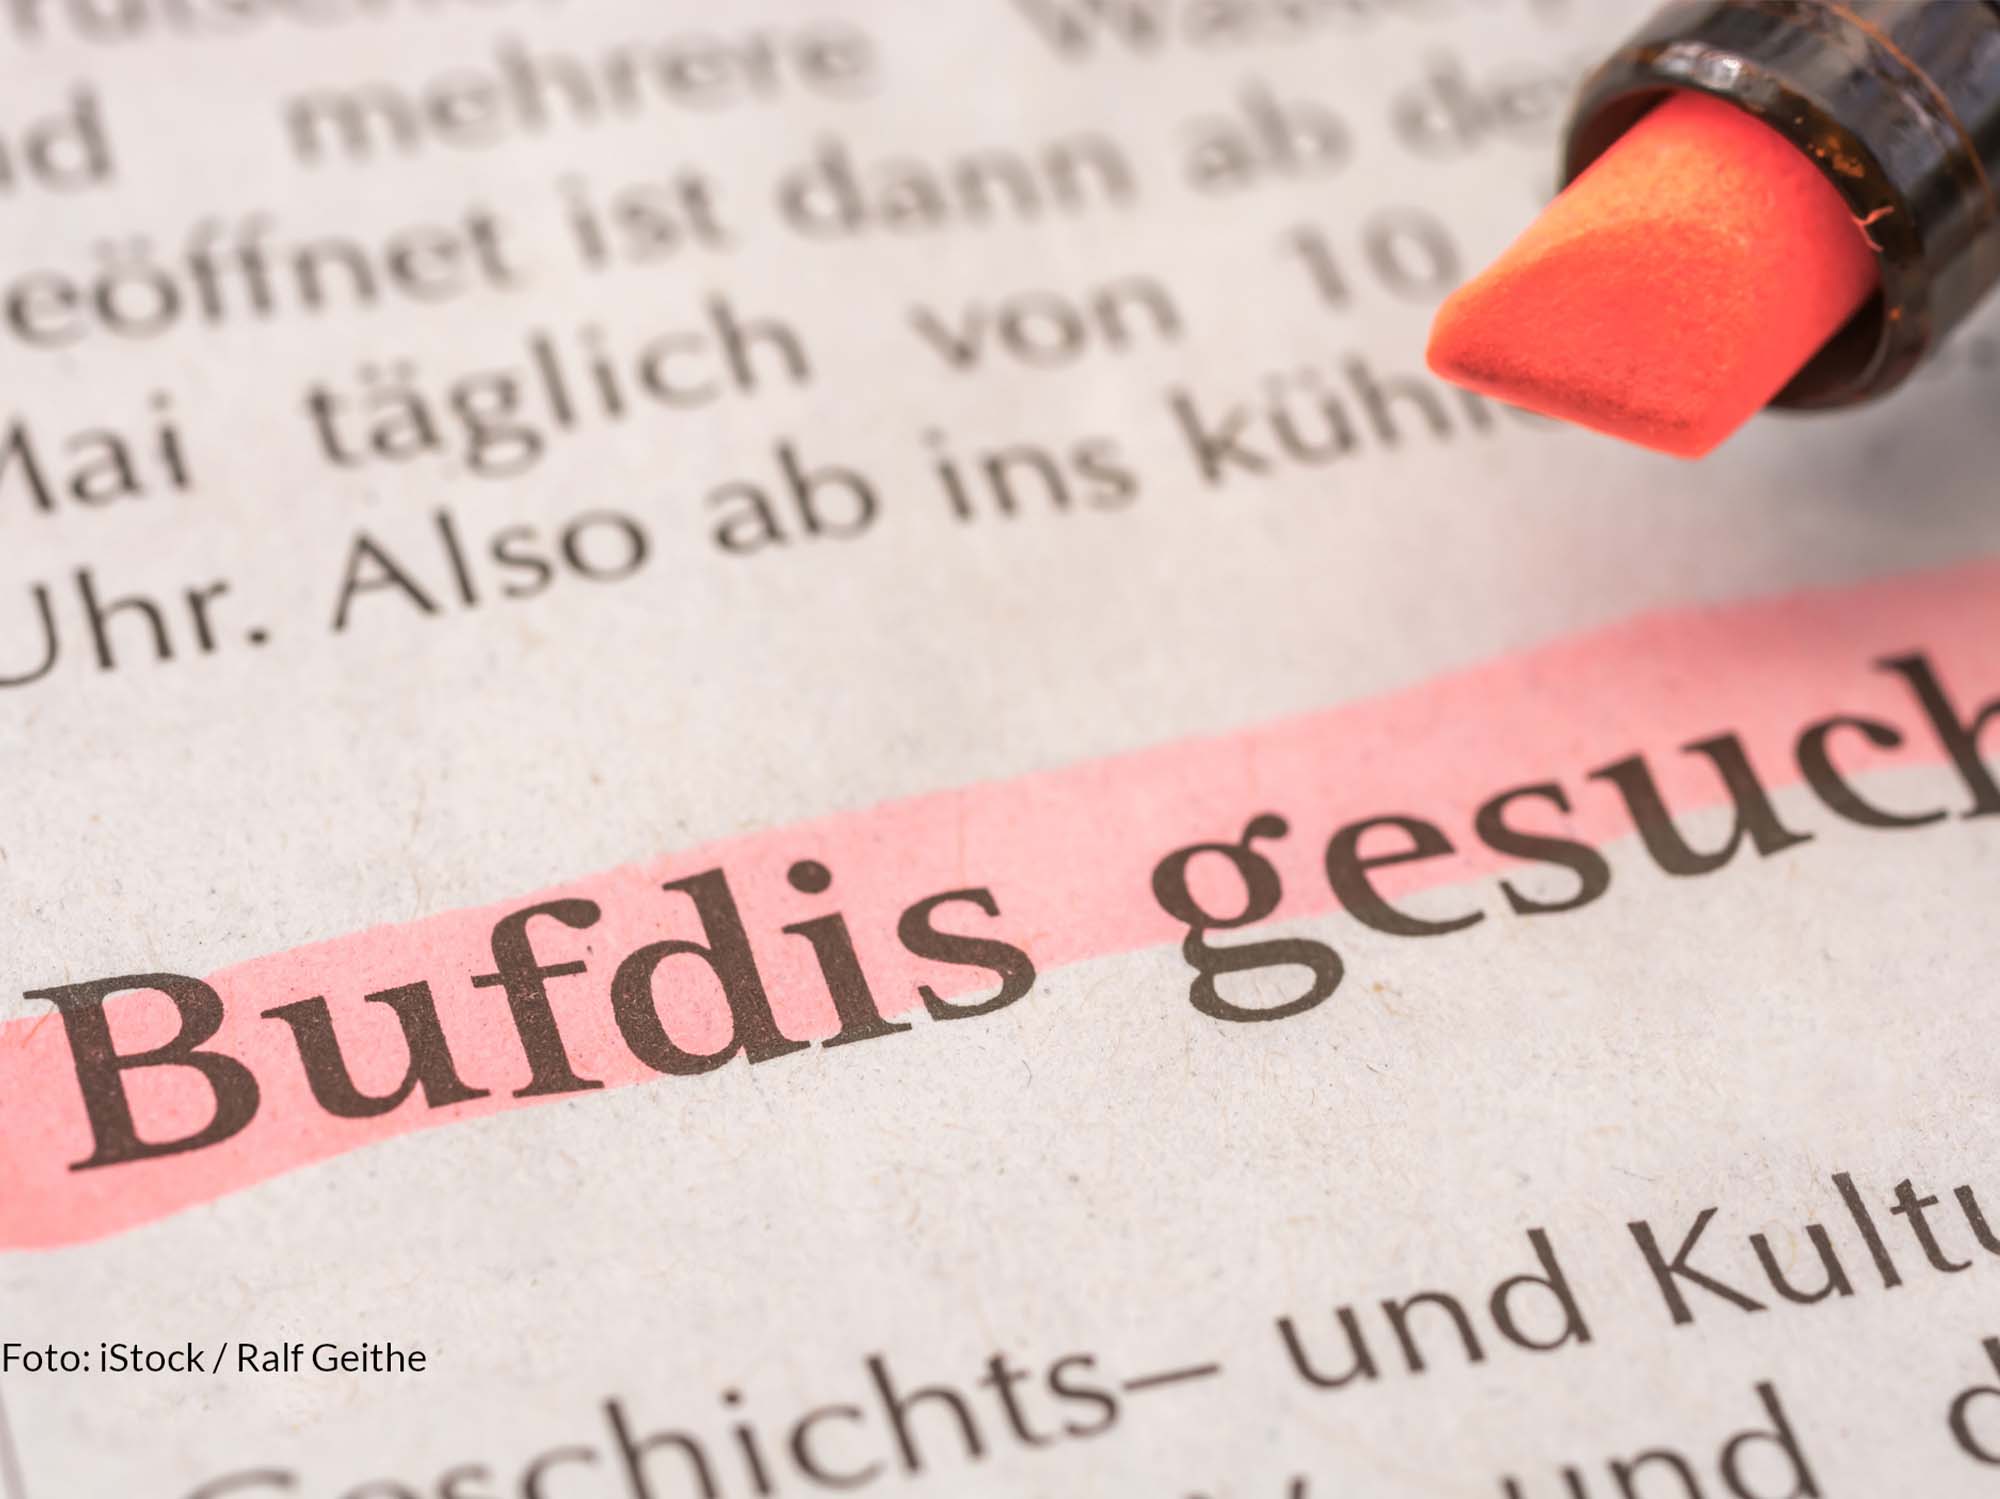 Zeitungsannonce "Bufdis gesucht". Foto: iStock / Ralf Geithe